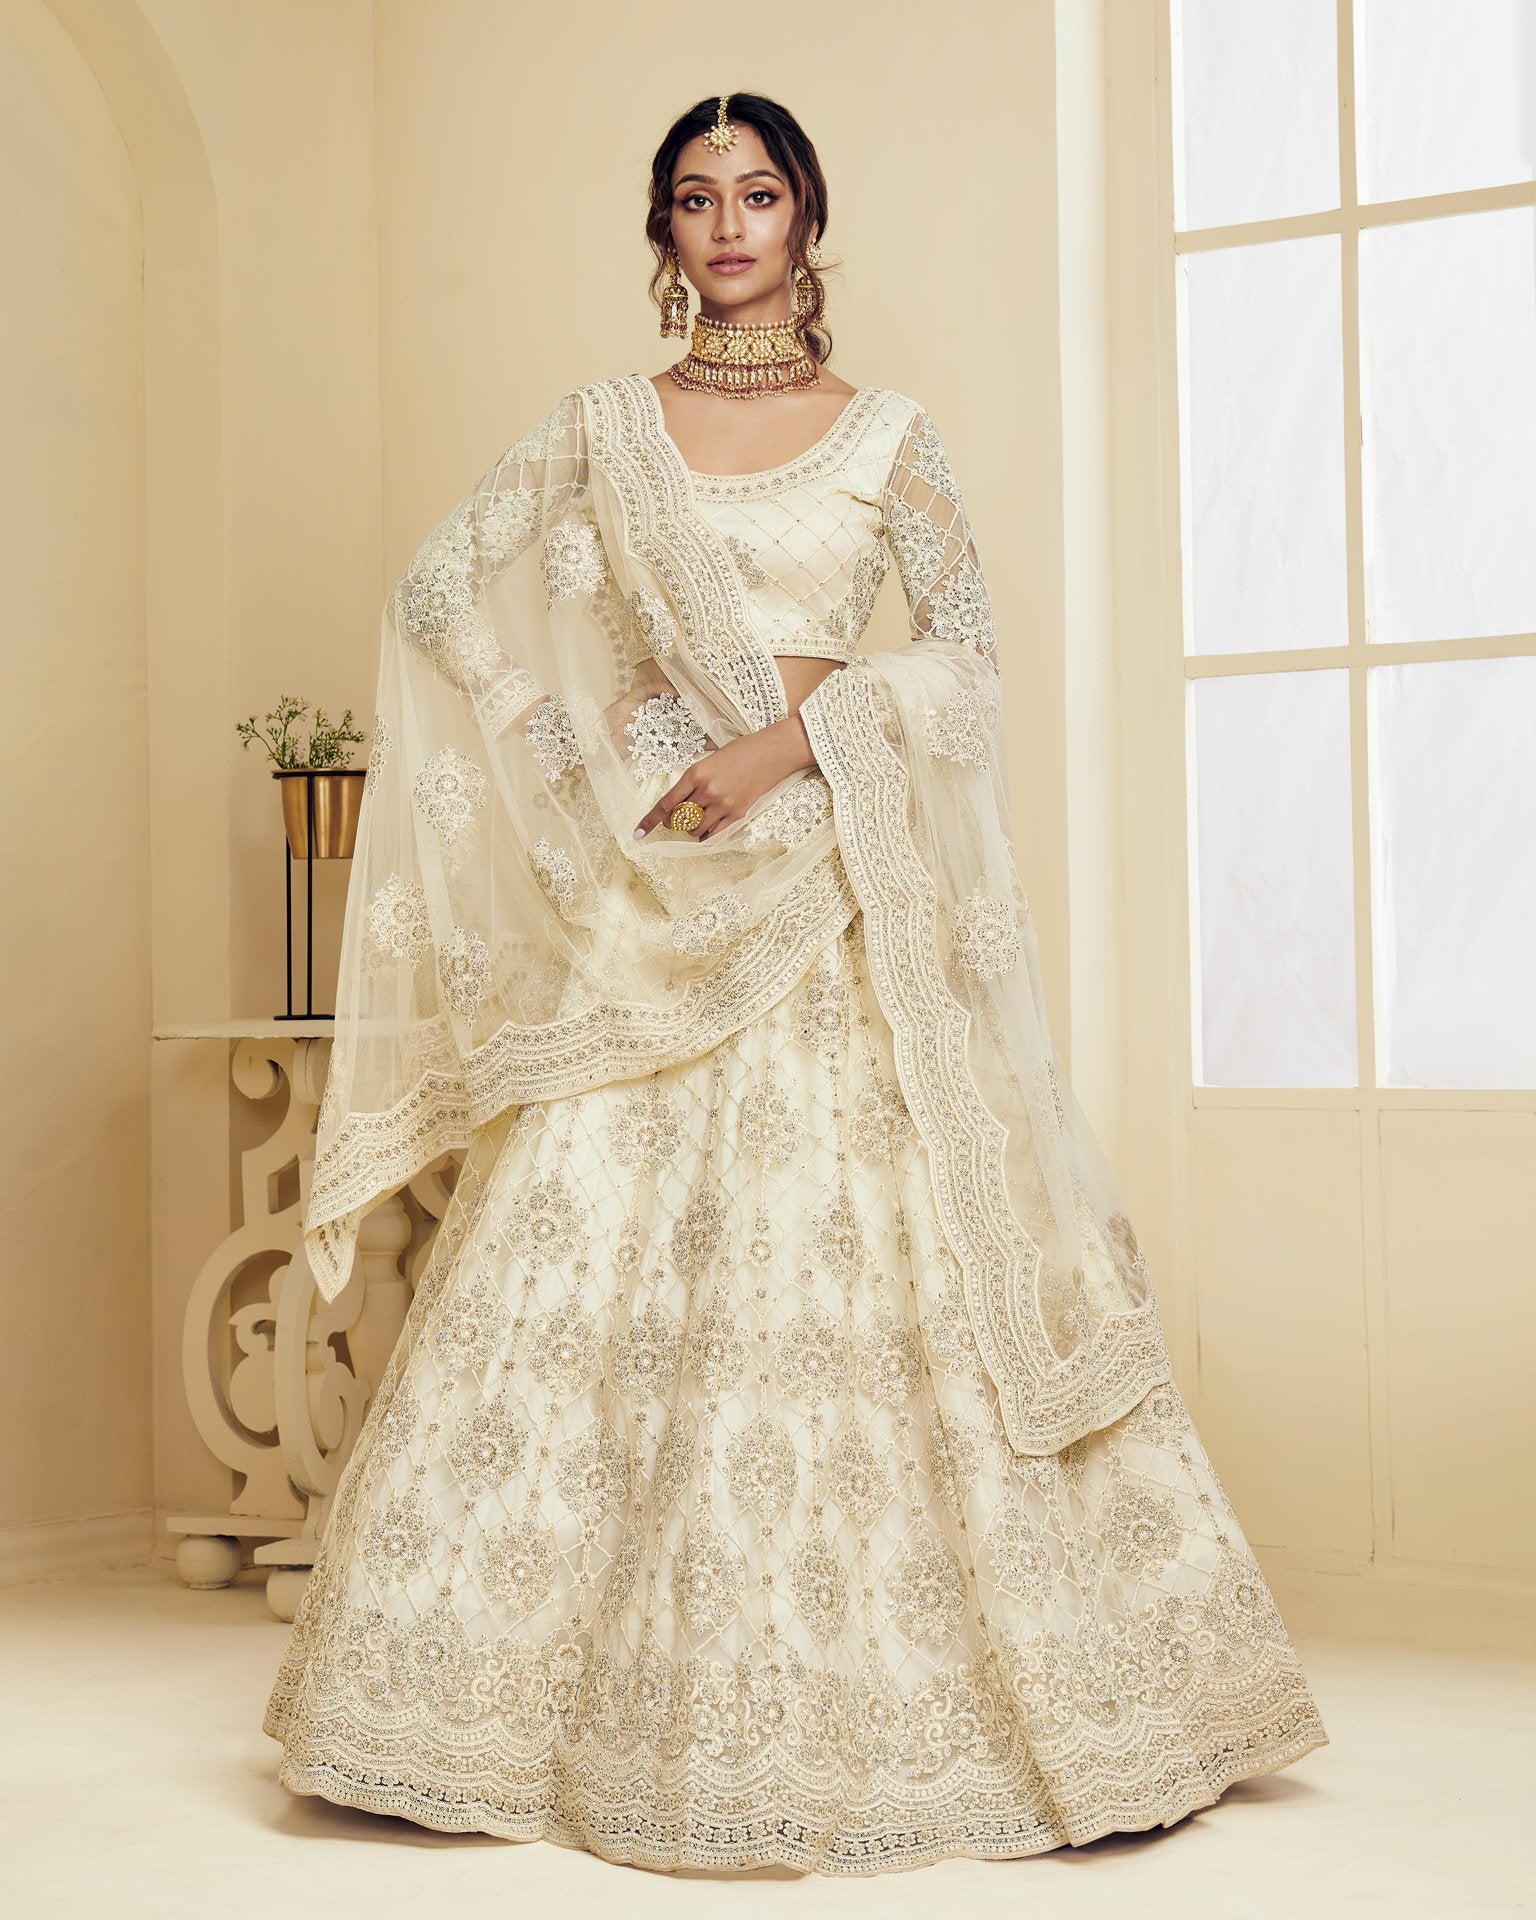 Off White Color Wedding Lehenga Choli In Net Fabric